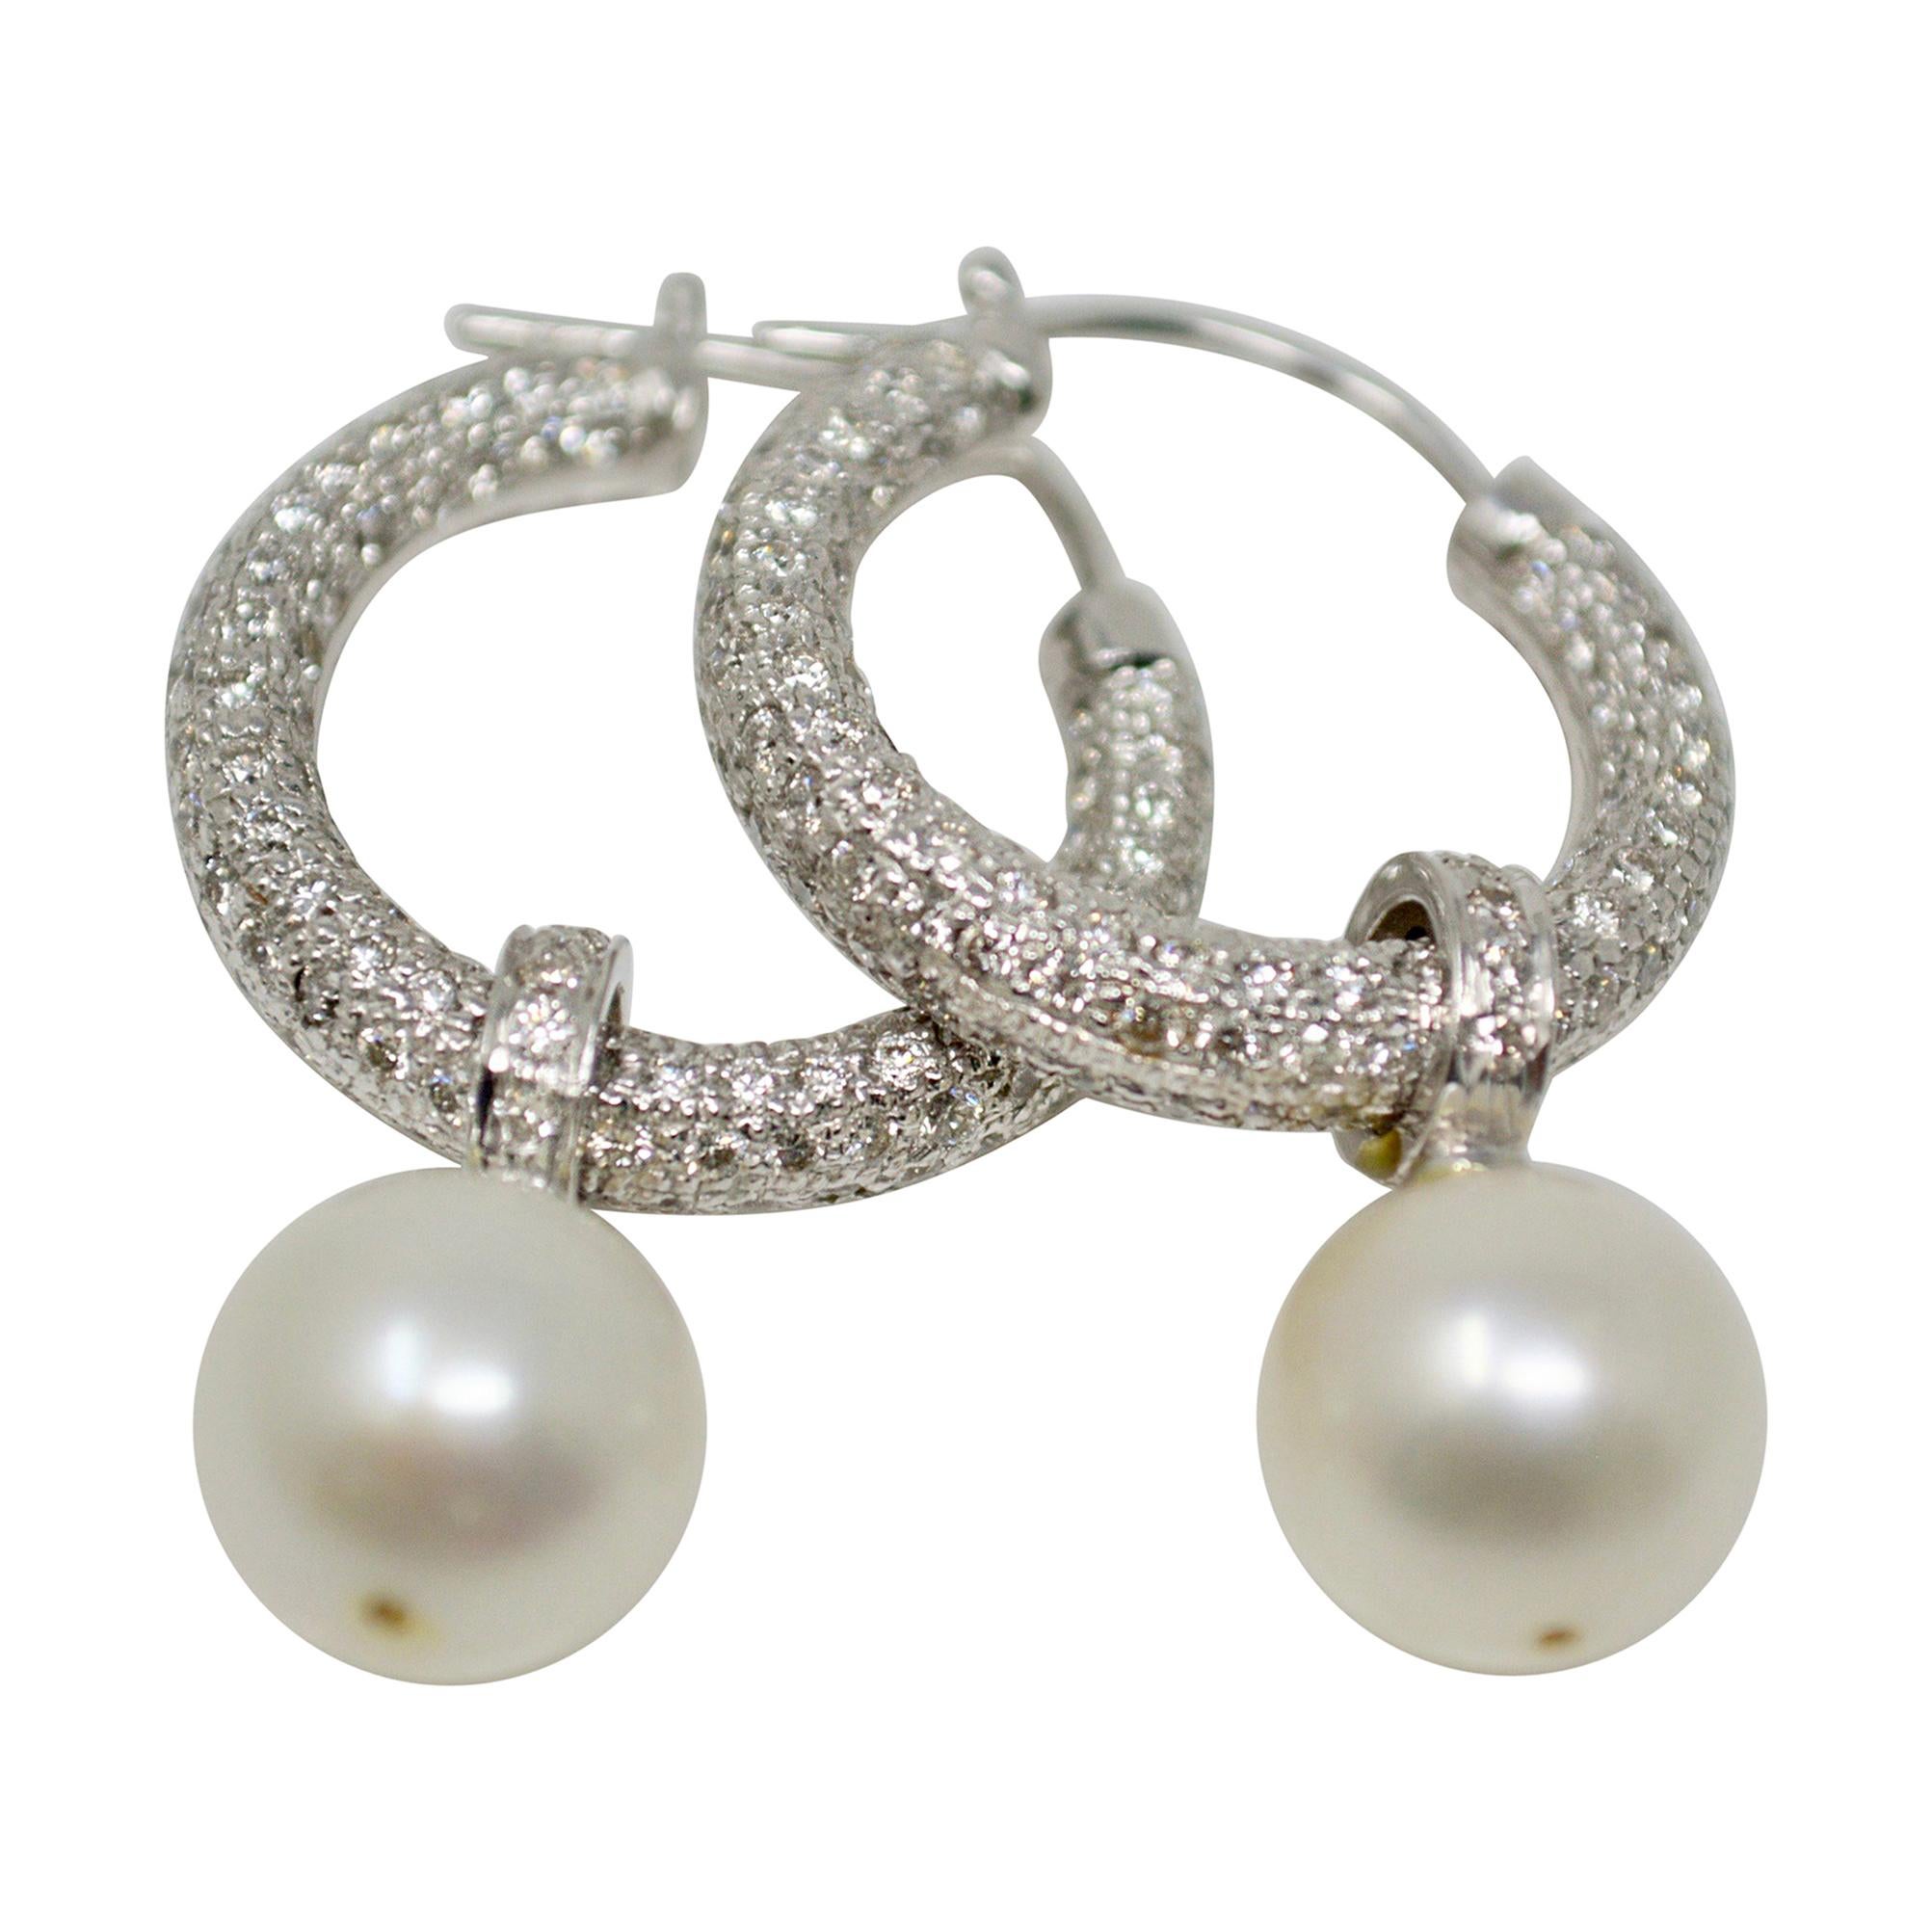 3 Carat White Diamond and South Sea Pearl Detachable Hoop Earrings in 18 Karat